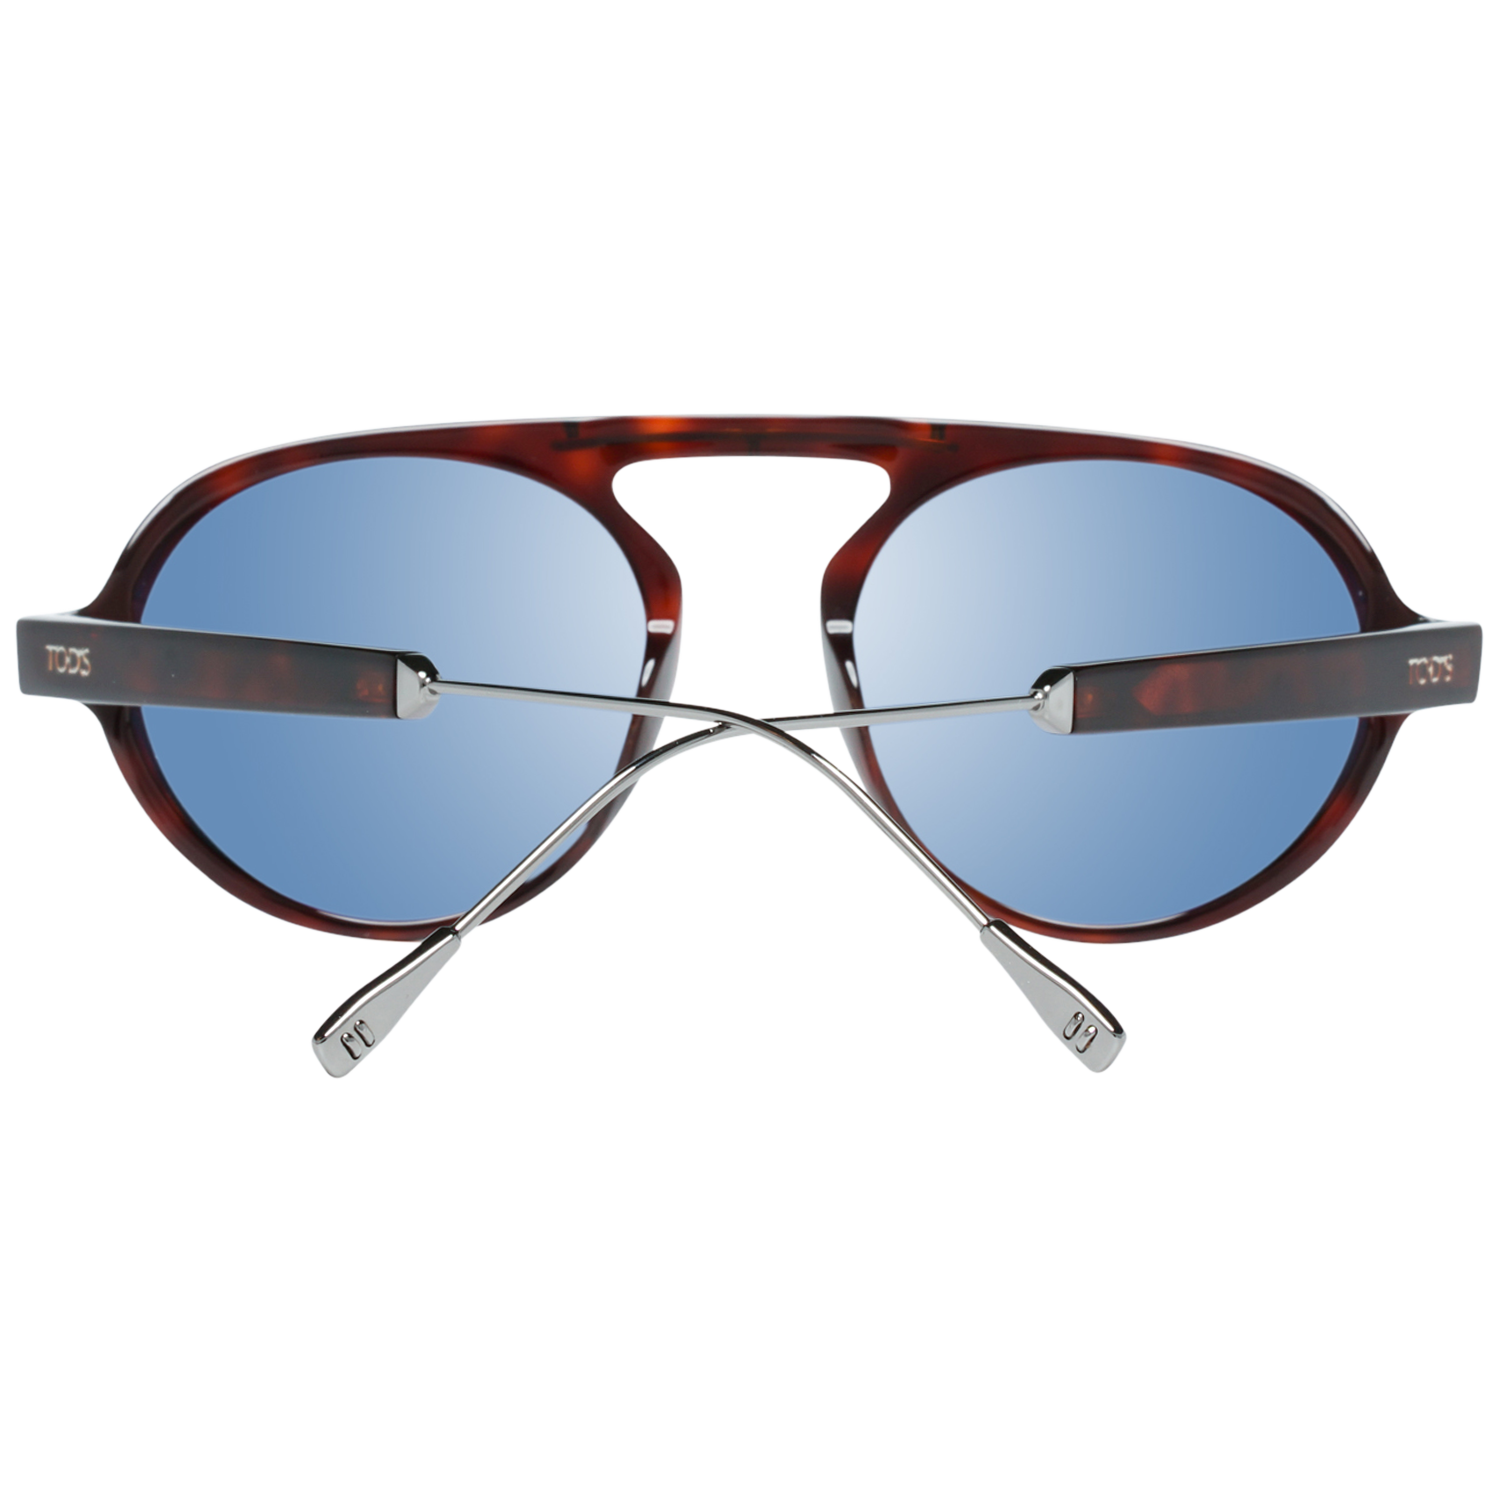 Sunglasses APRILIA CAPONORD RACING 54WC Lens Hight Quality! Occhiali da sole 